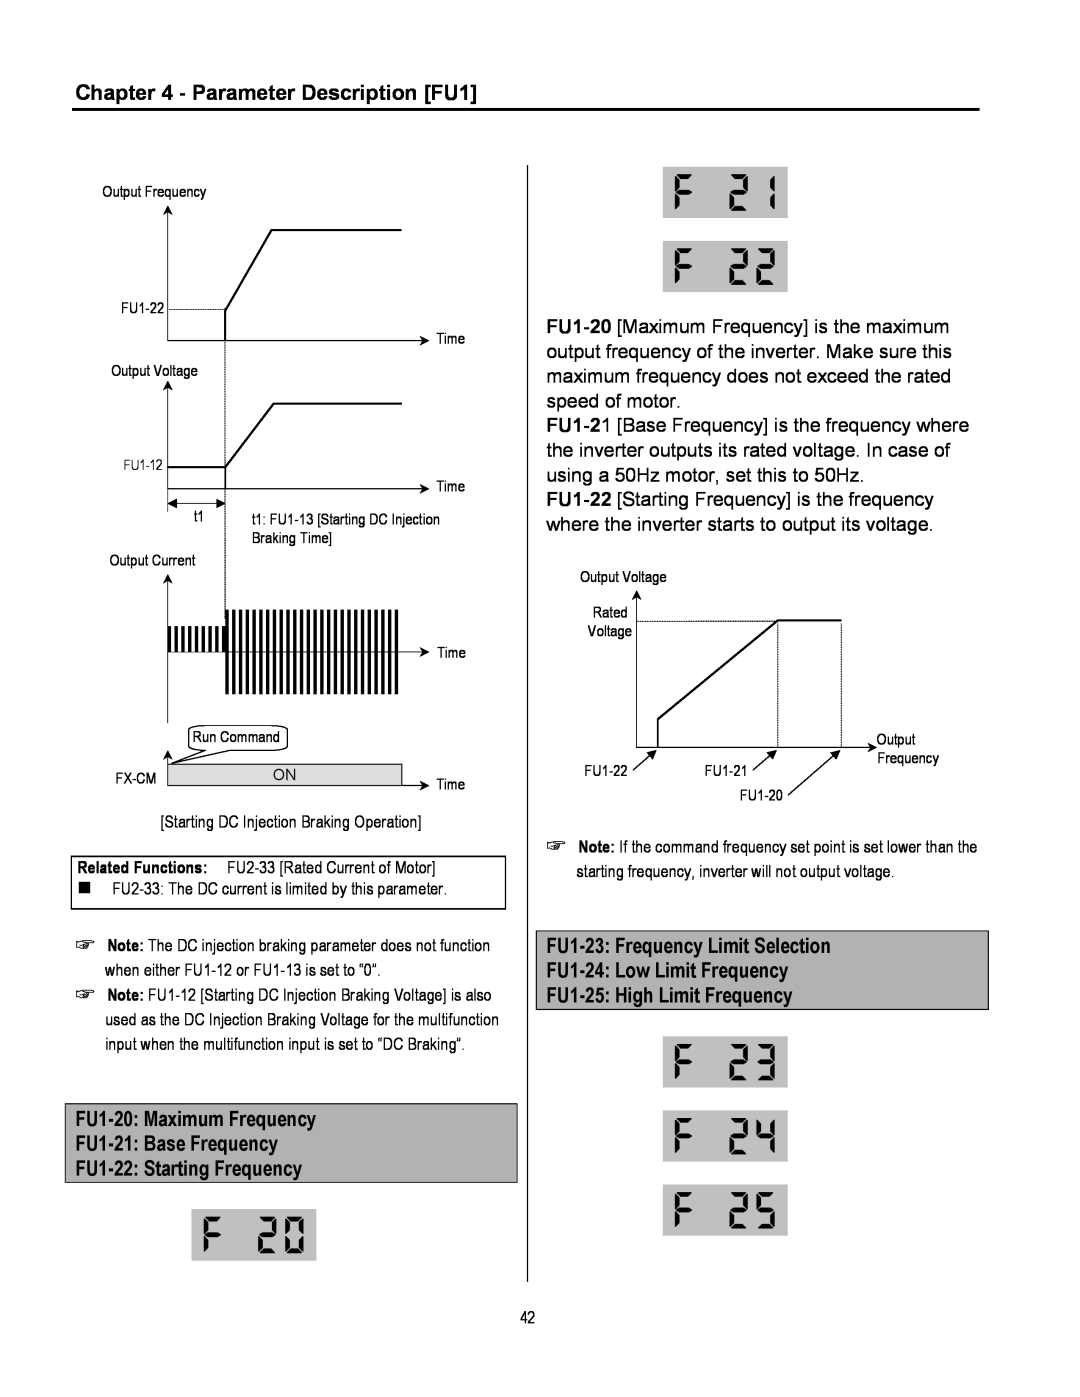 Cleveland Range inverter manual Parameter Description FU1, FU1-20 Maximum Frequency FU1-21 Base Frequency 